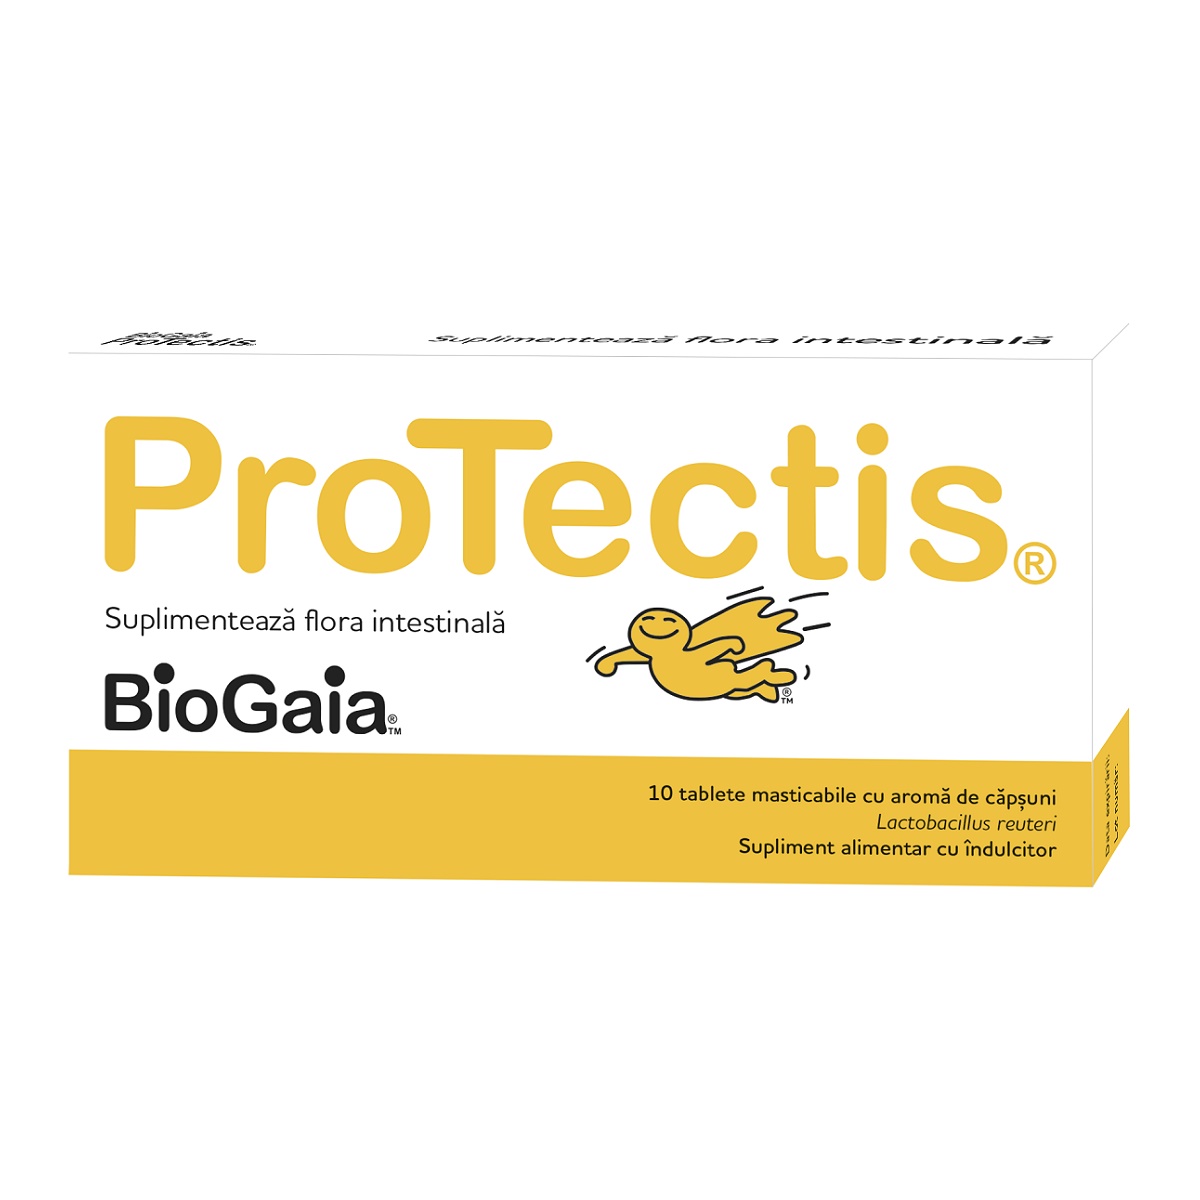 Protectis aroma de capsuni, 10 tablete masticabile, BioGaia